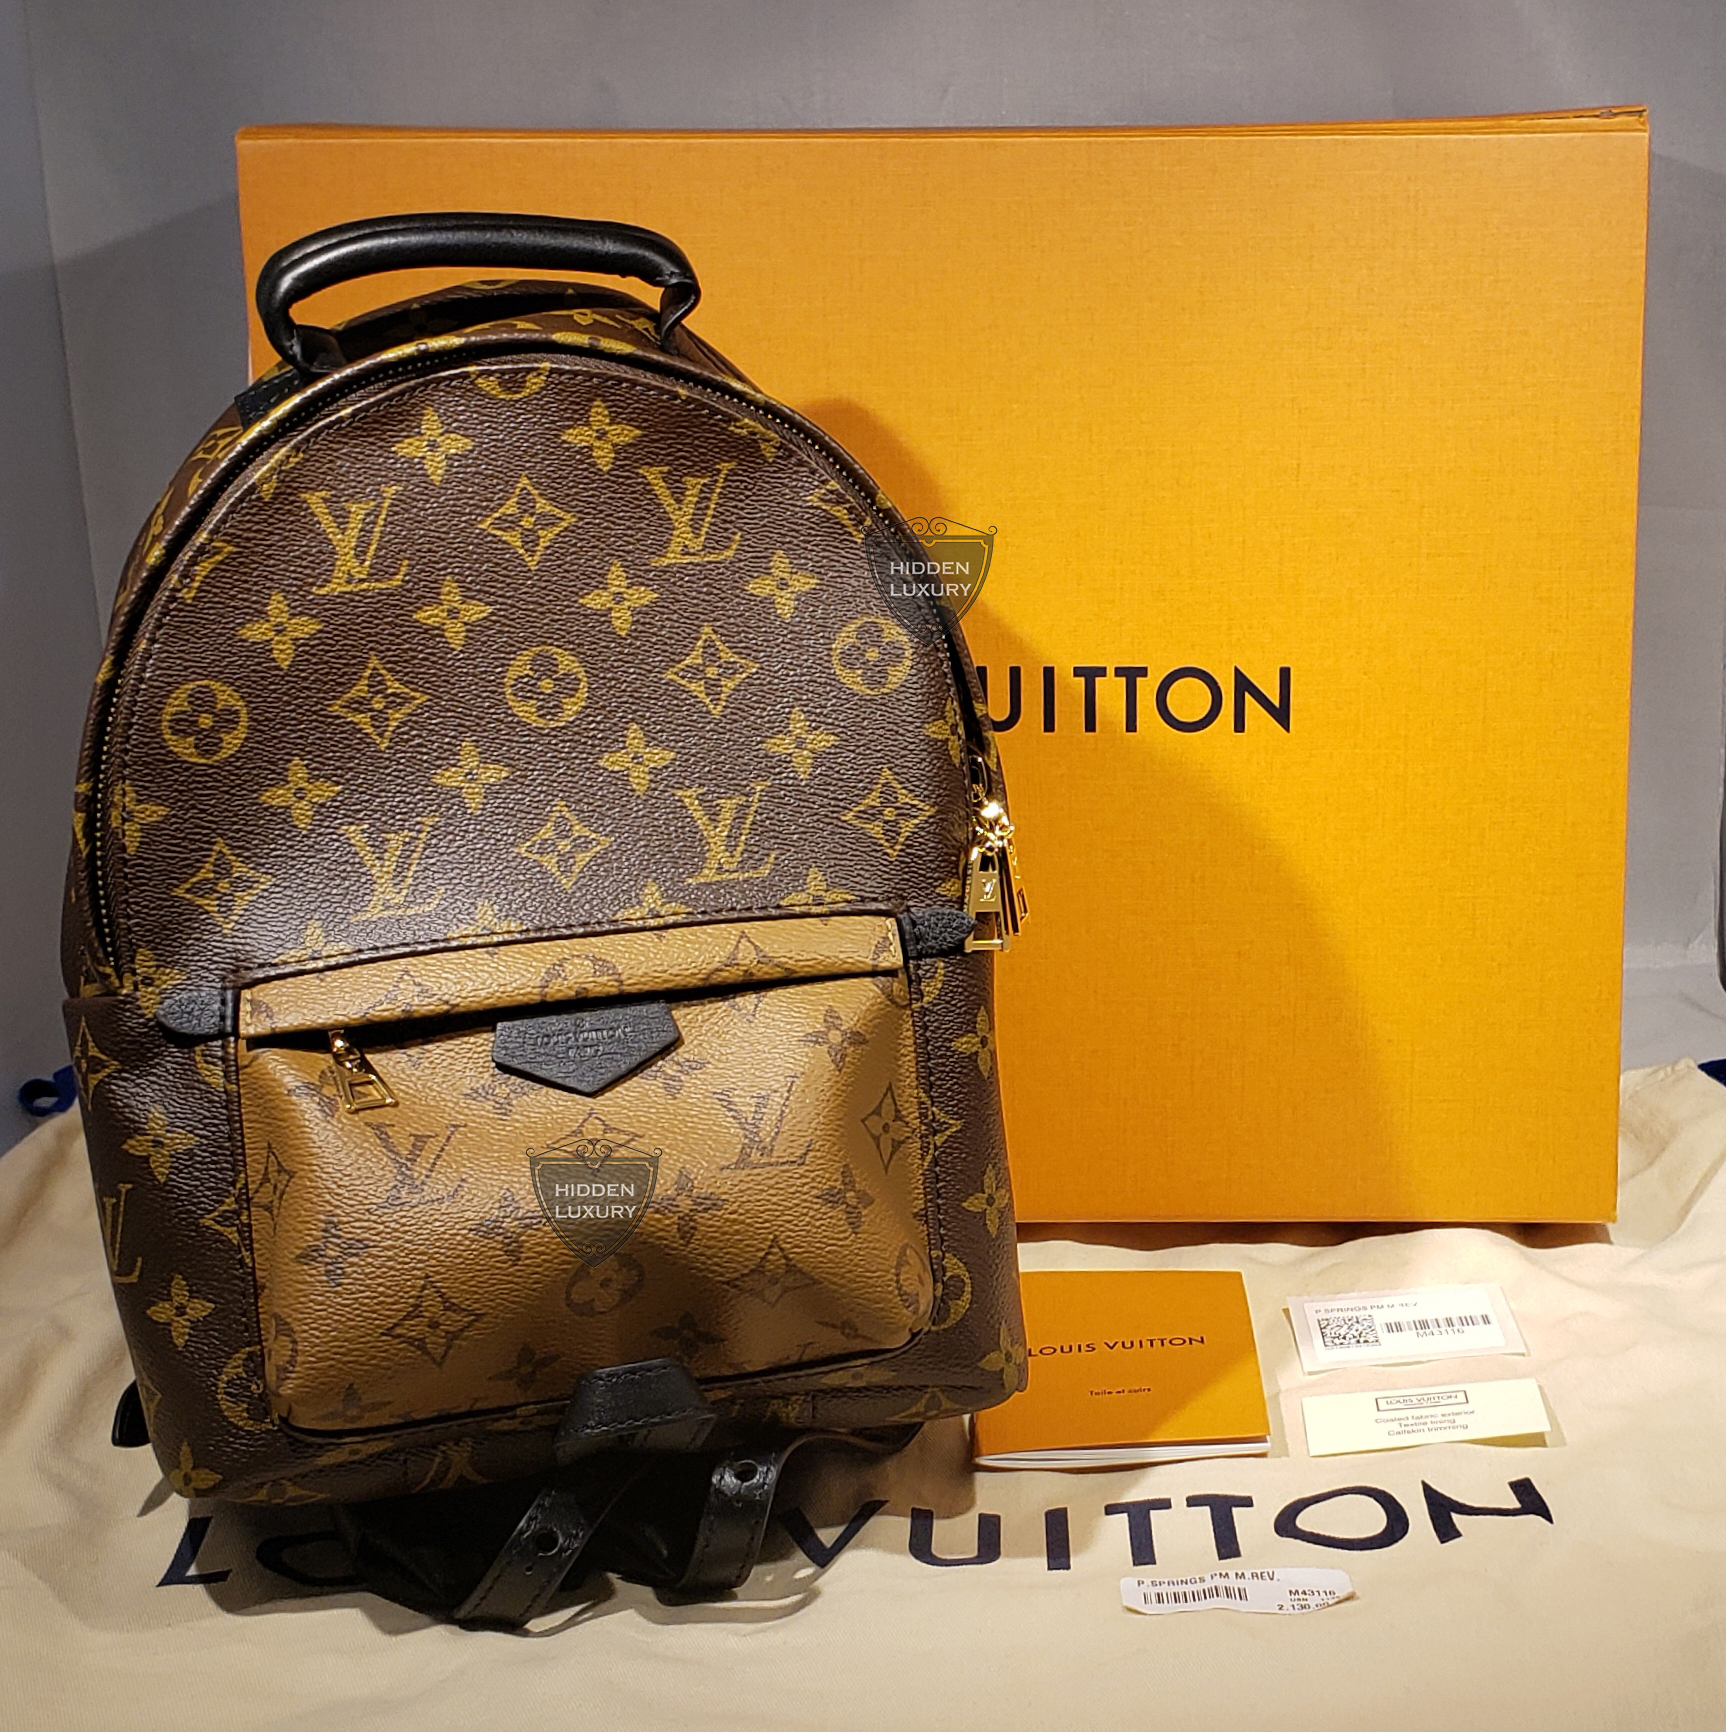 Louis Vuitton, Bags, Authentic Louis Vuitton Palm Springs Pm Backpack